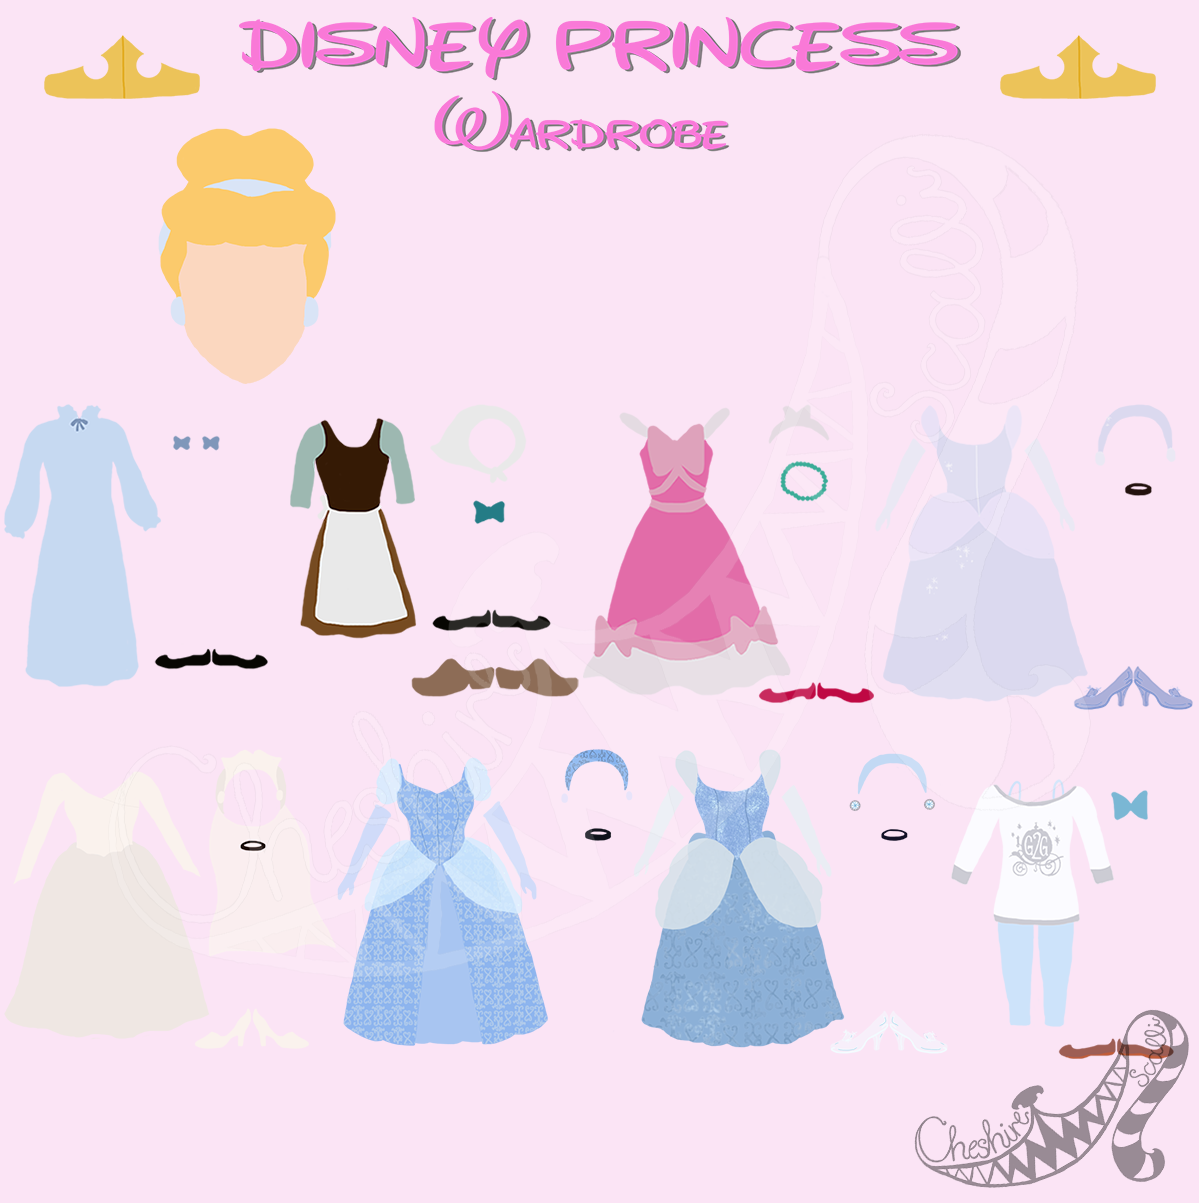 Disney Princess Wardrobe - Cinderella Sneak Peek by CheshireScalliArt ...